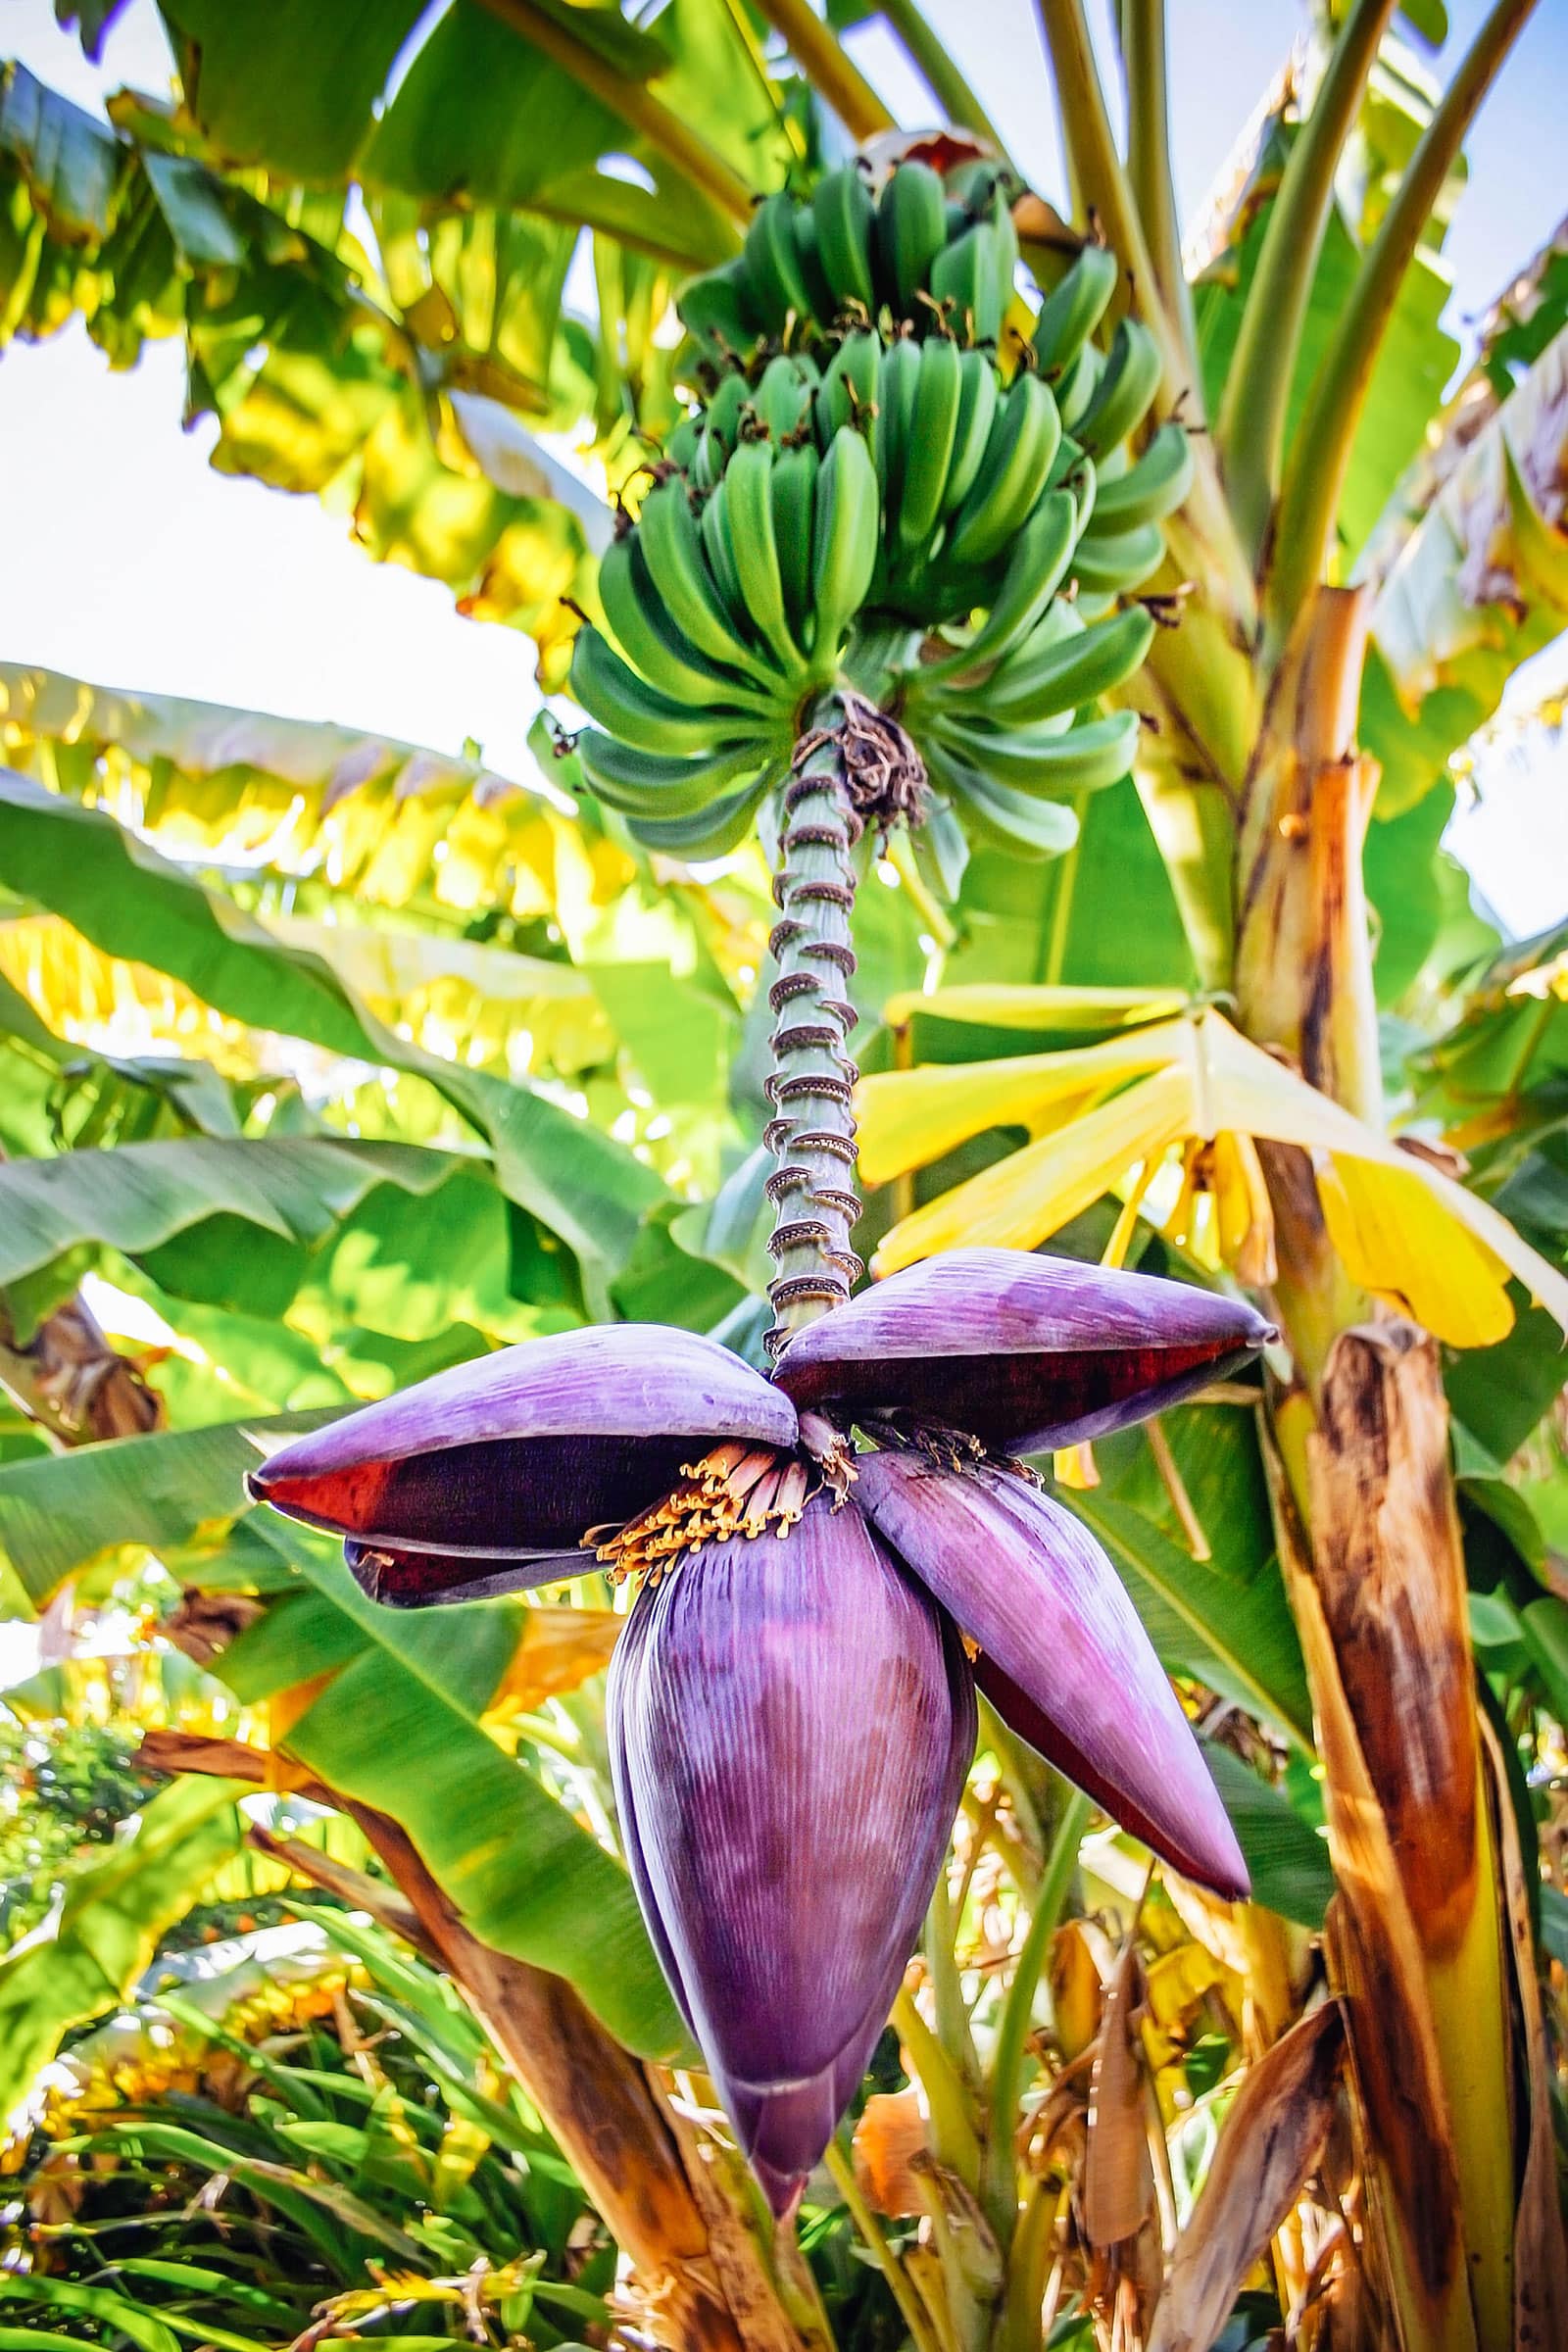 Purple banana flower dangling off a banana stem with green unripe bananas above it